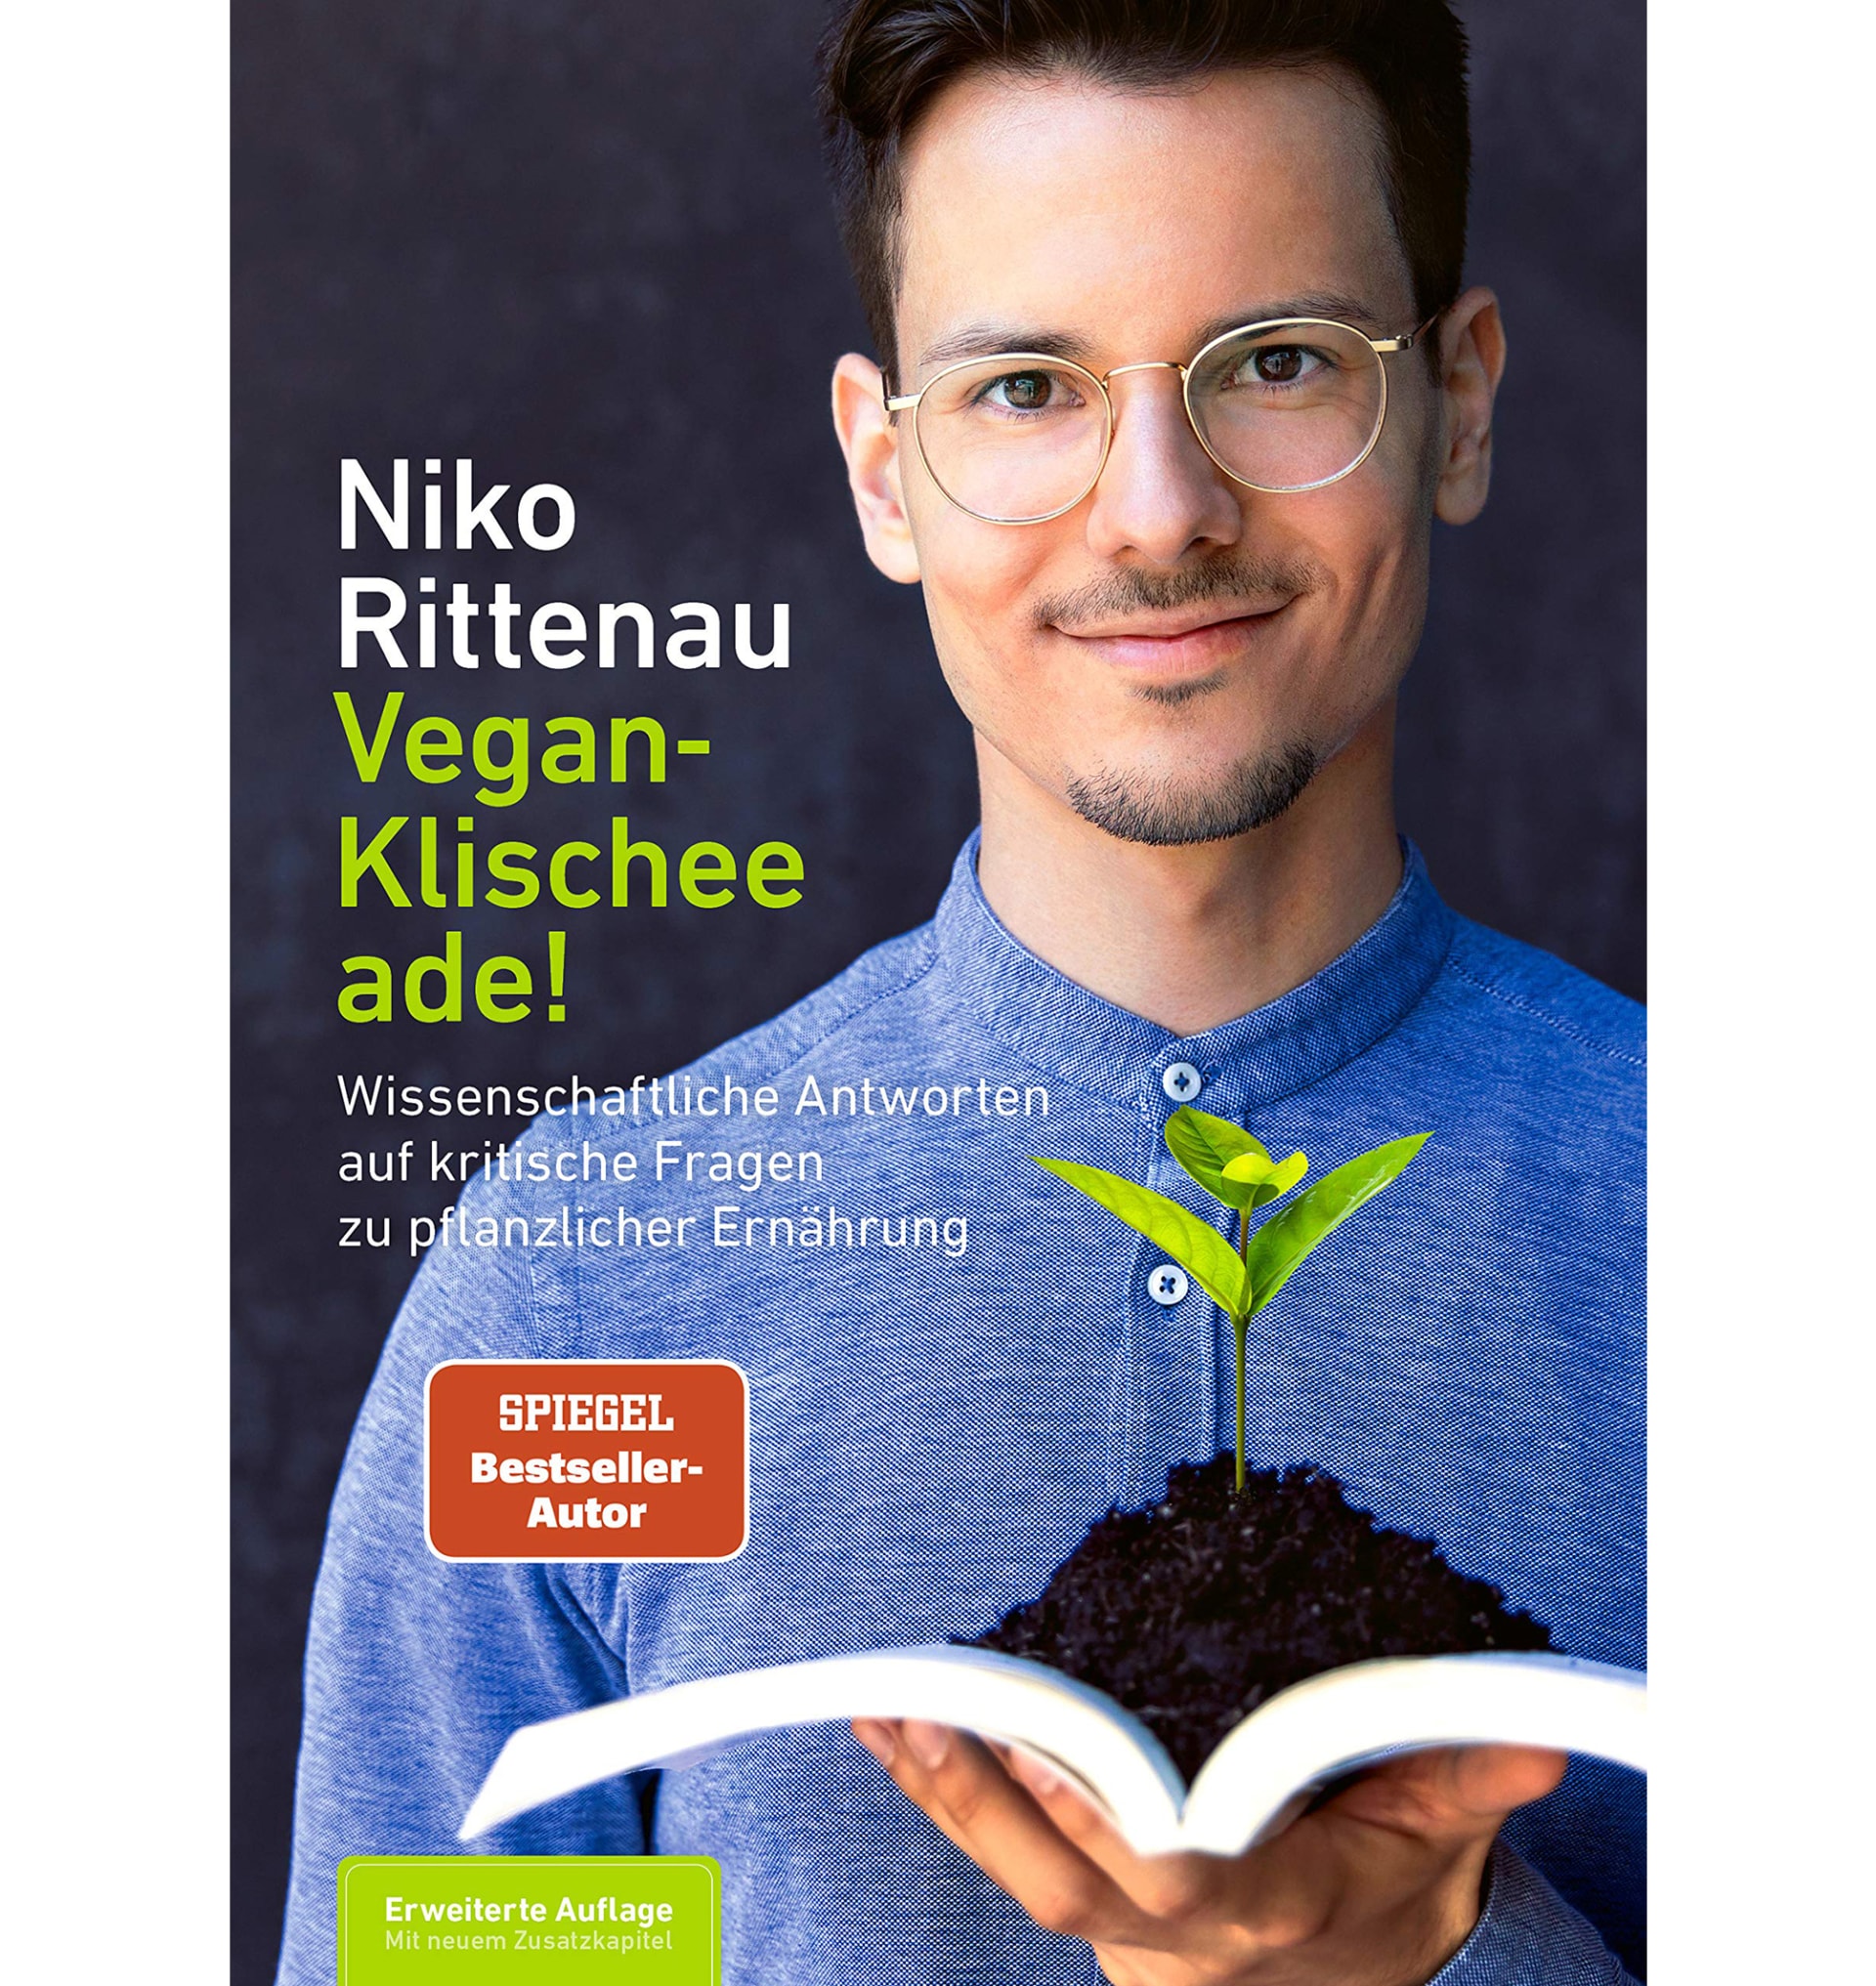 Kniha kuchaře a výživového poradce Nika Rittenaua nazvaná Vegan-Klischee Ade! se stala bestsellerem.